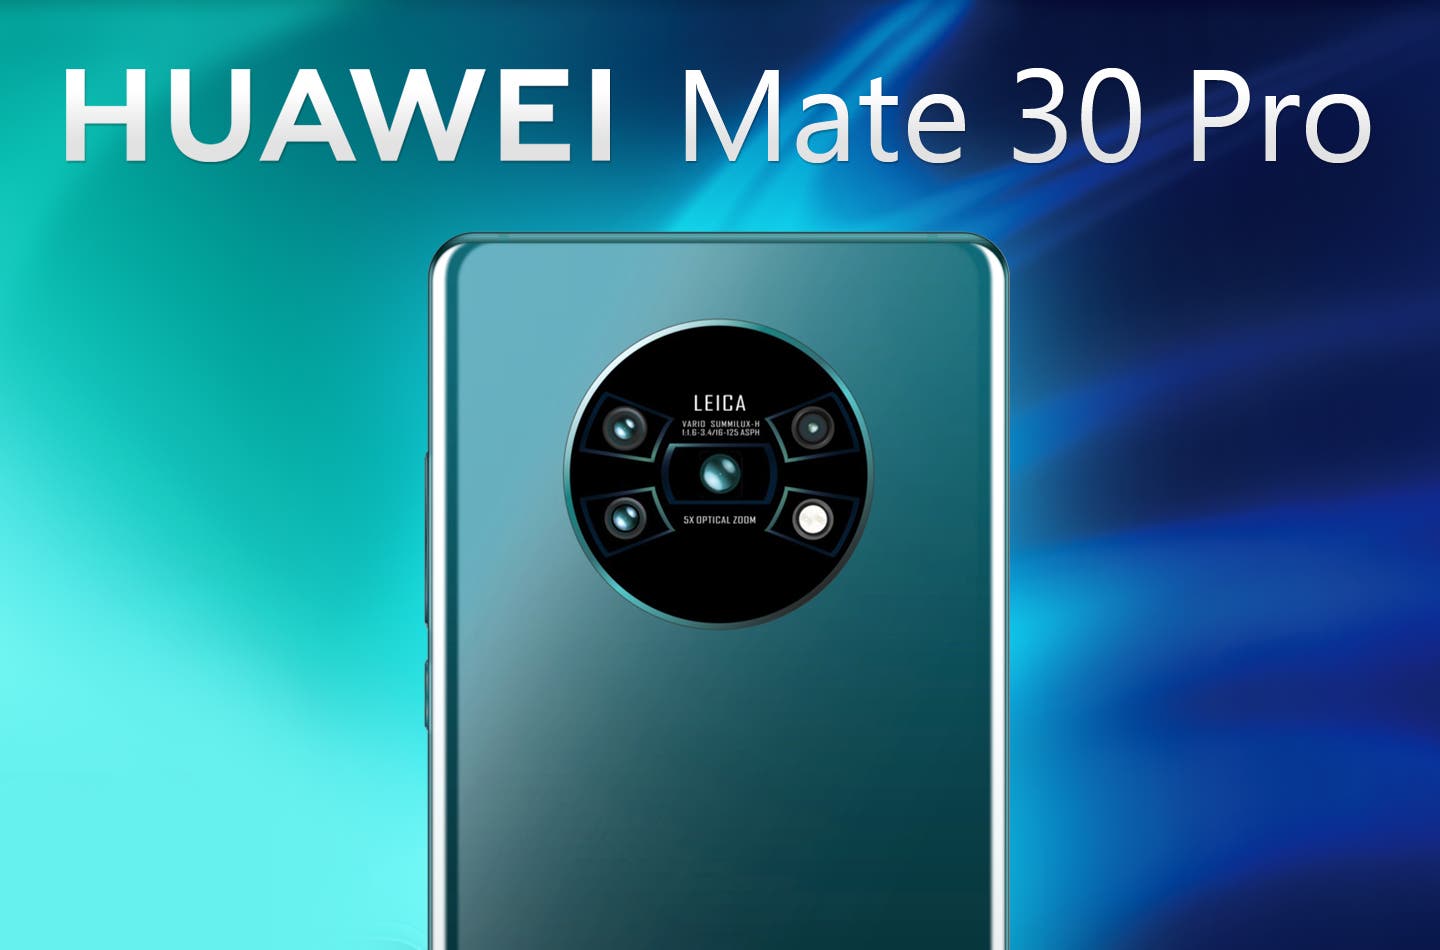 Samsung Mate 30 Pro